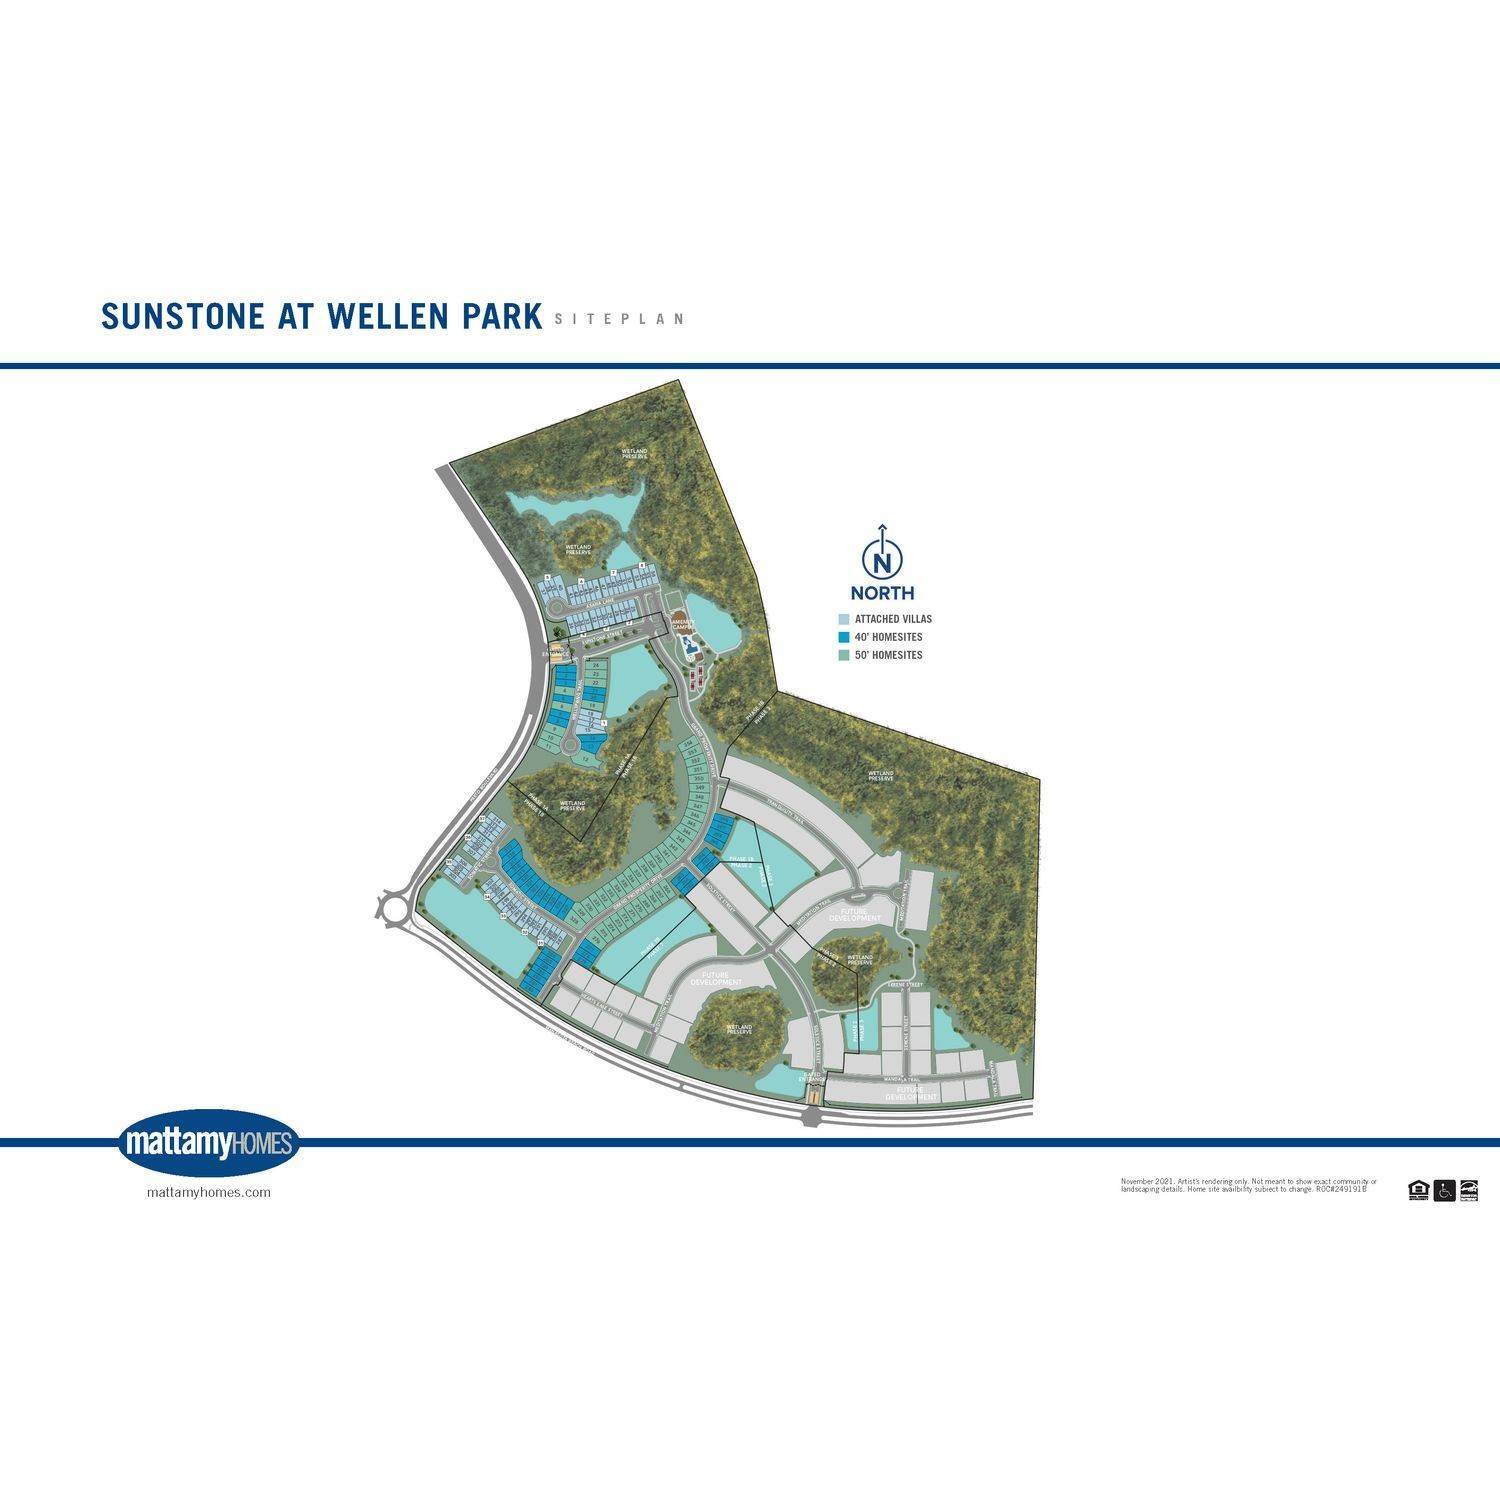 Wellen Park - Sunstone建於 18150 Wellspring Ct, 威尼斯, FL 34293